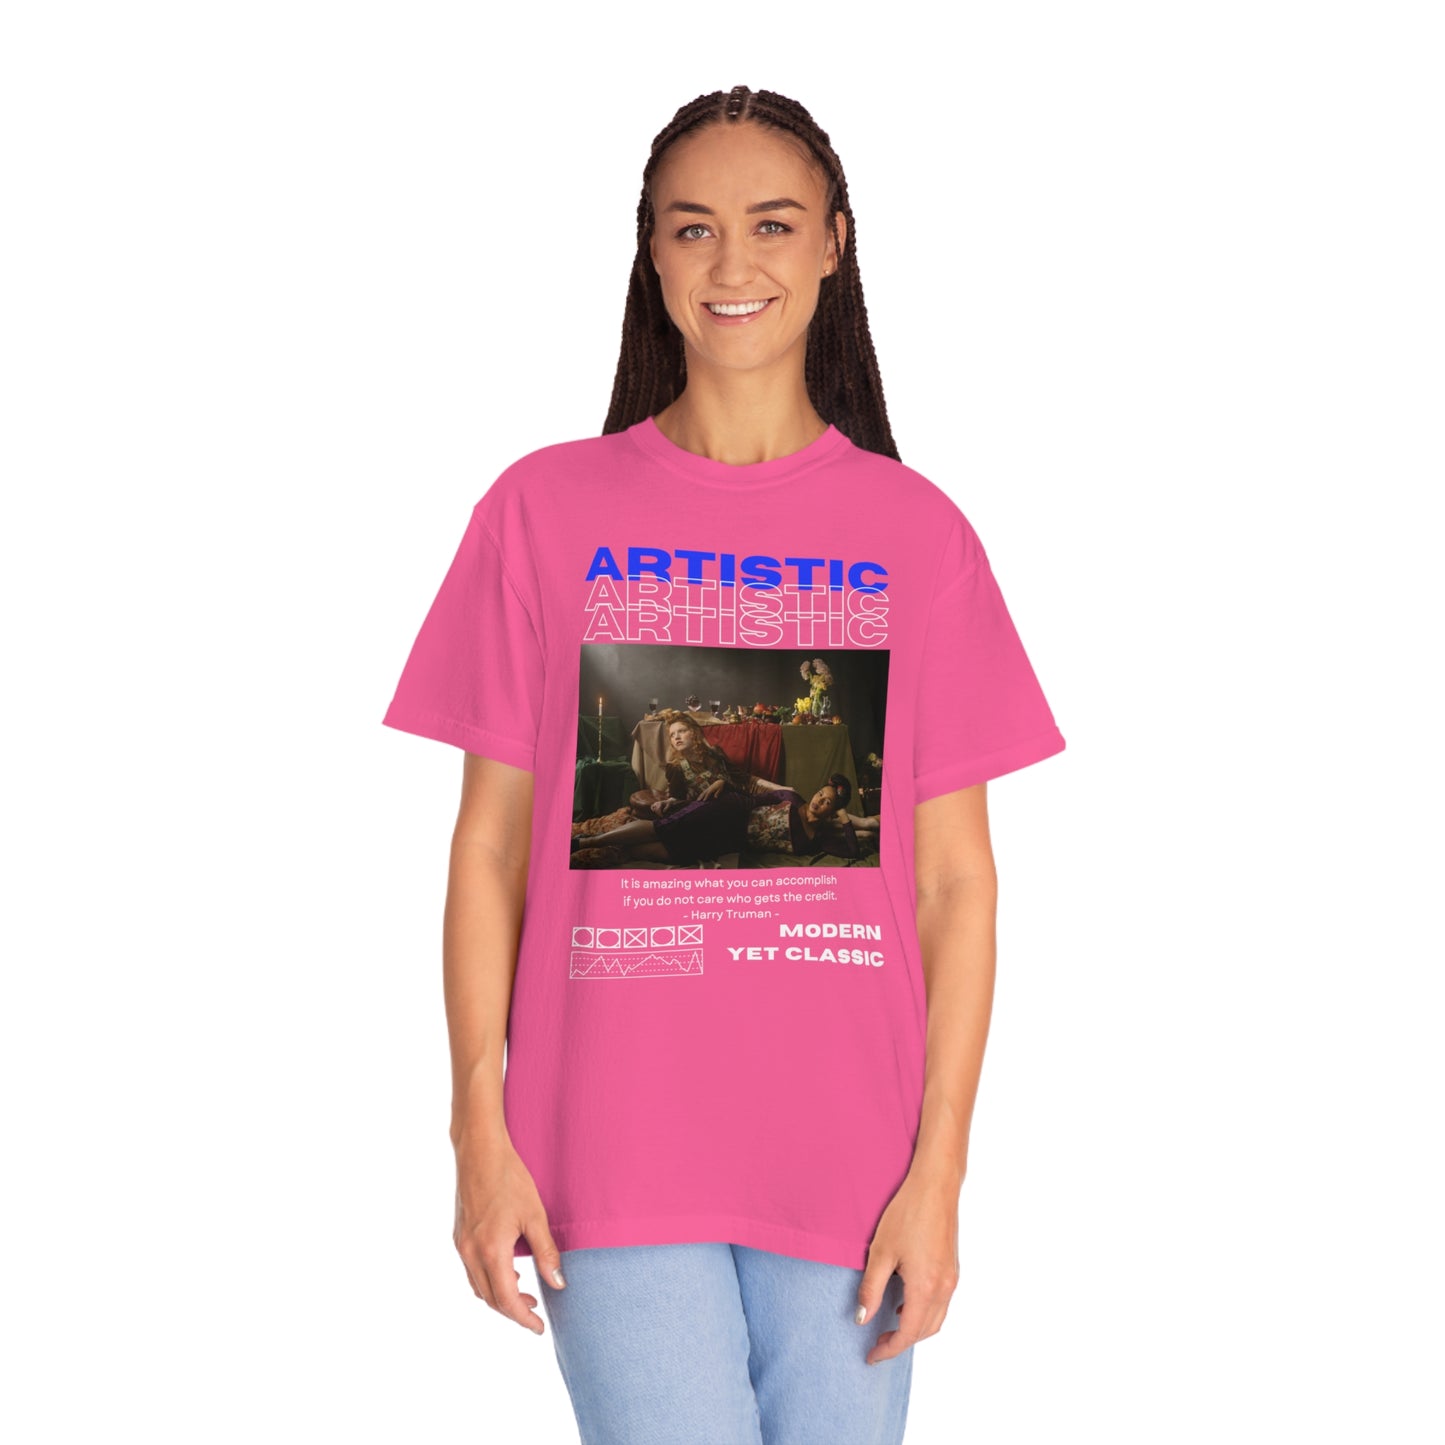 Artistic T-shirt